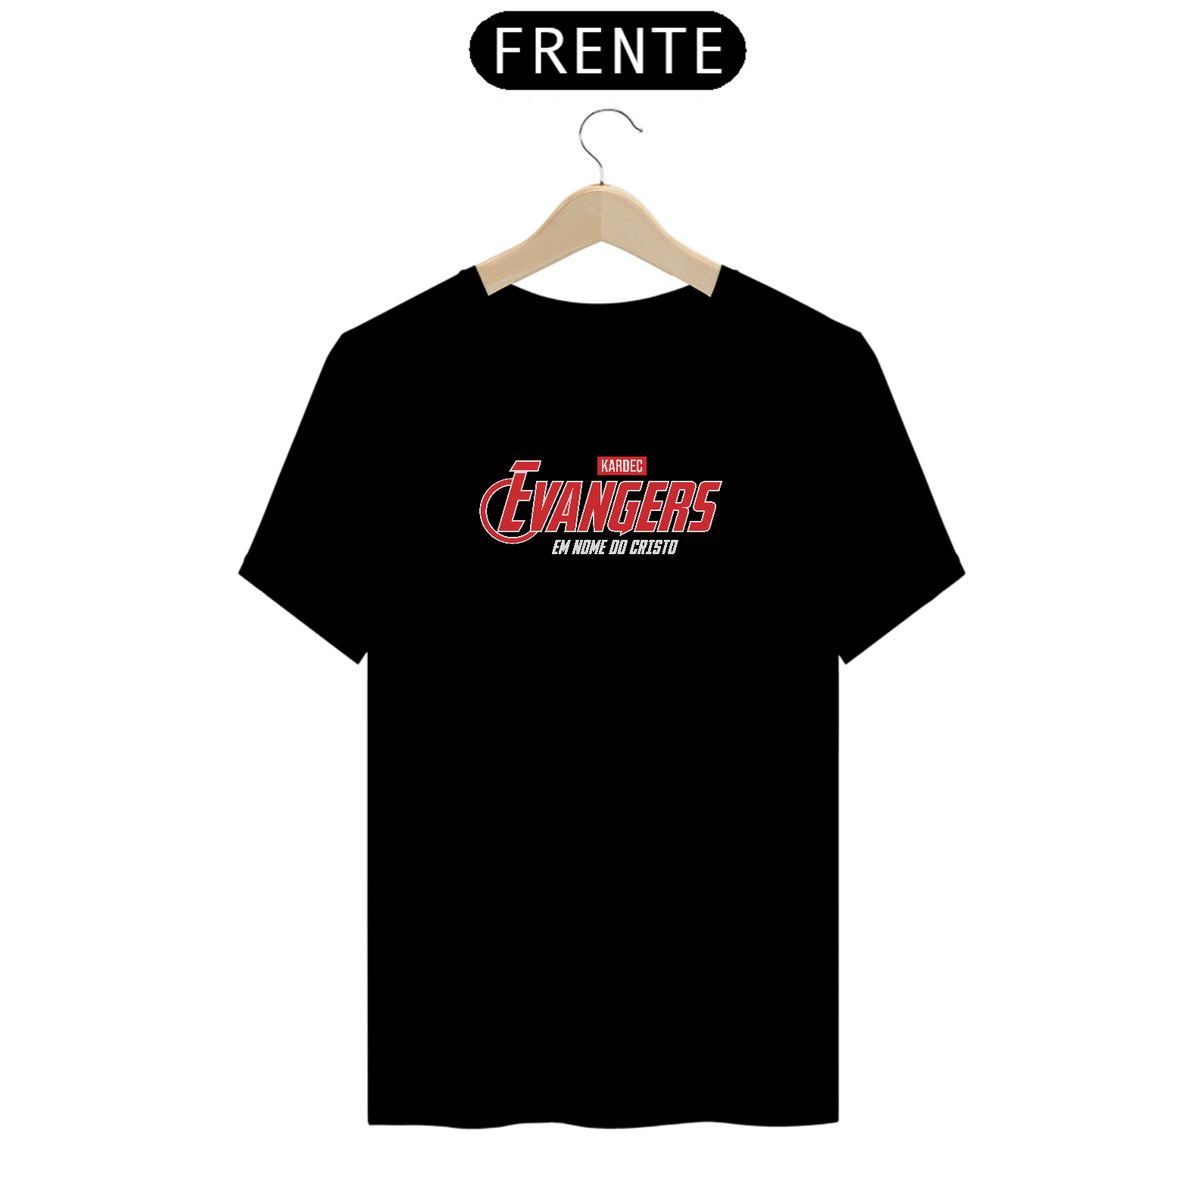 Nome do produto: Camiseta Espirita Evangers